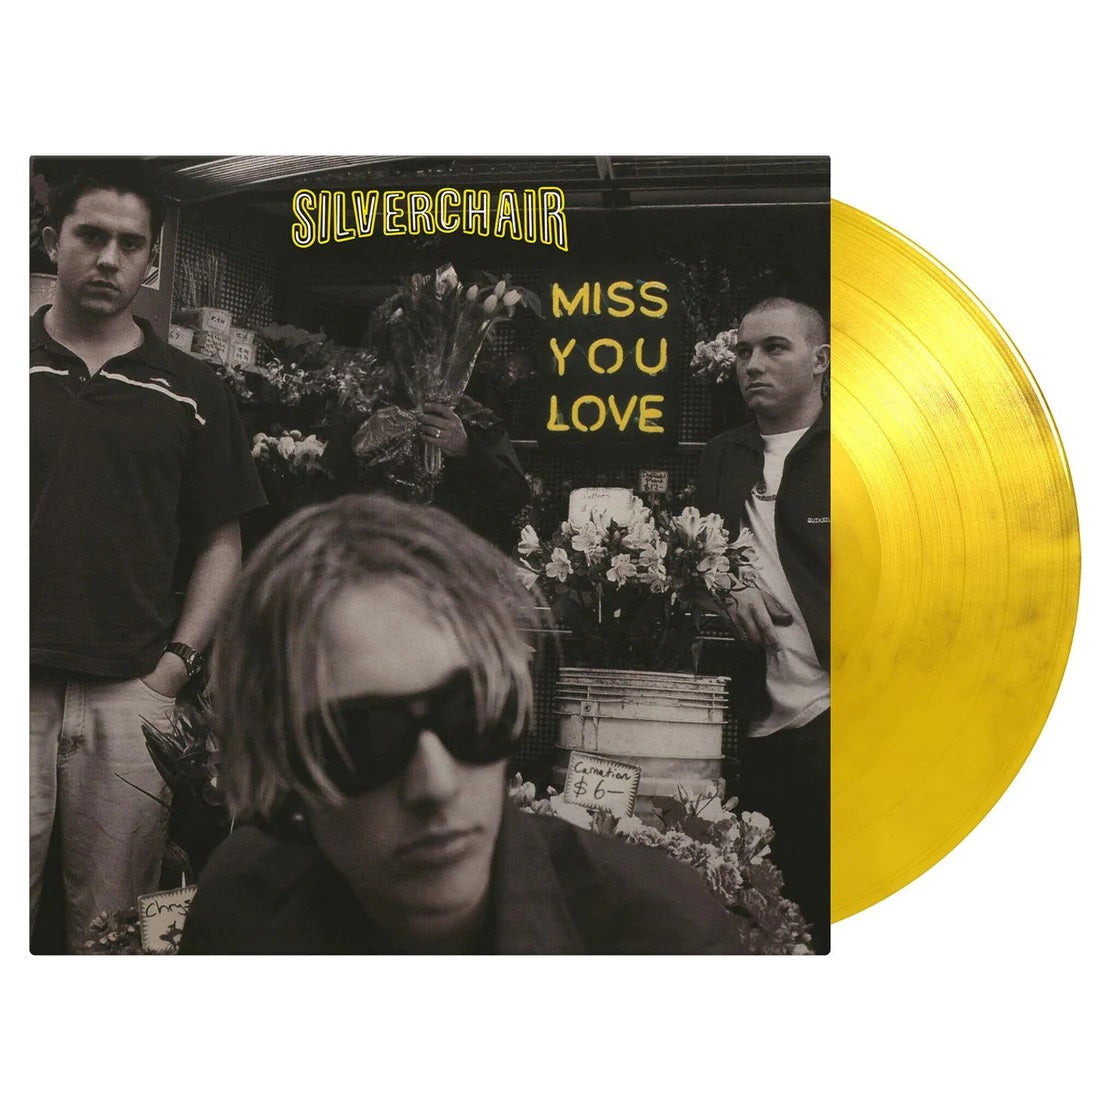 Silverchair - Miss You Love (Ltd. Ed. 12" Crystal Clear, Yellow & Black Marbled vinyl) - Vinyl - New